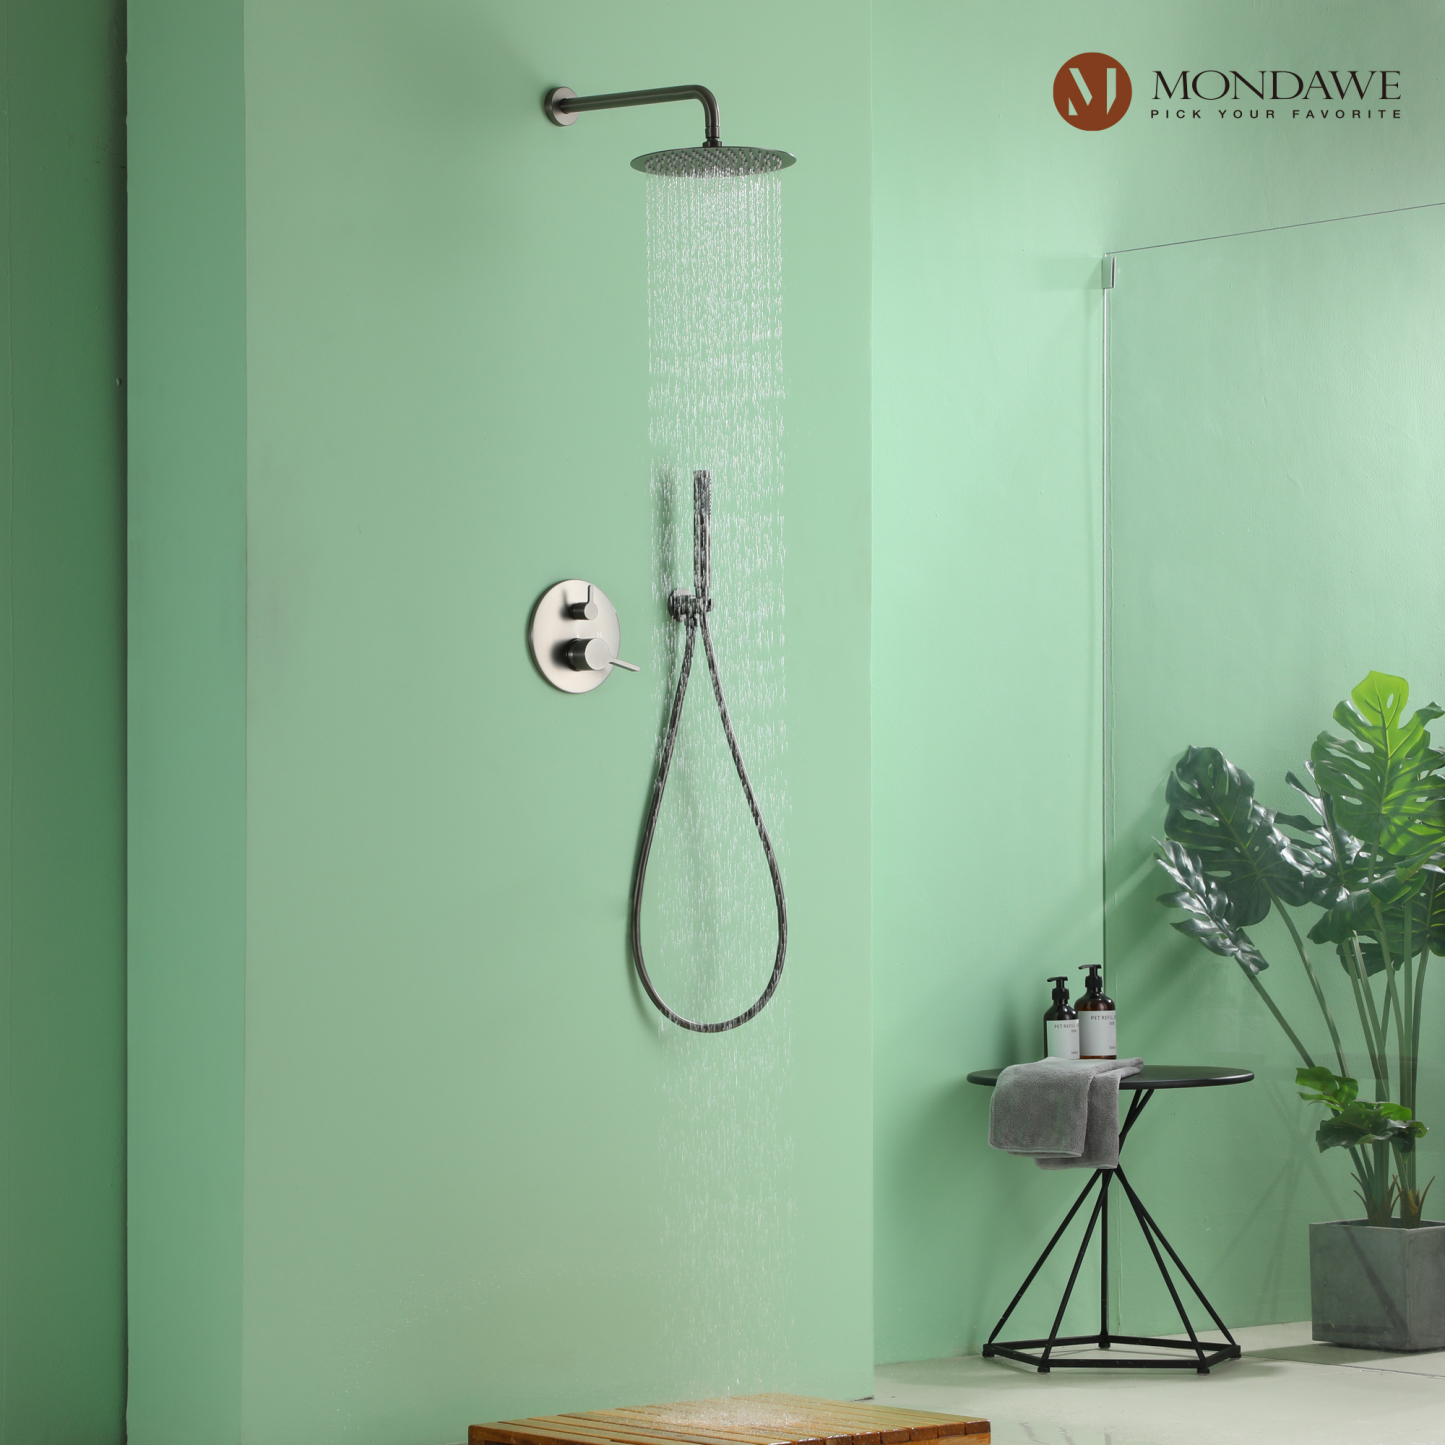 Mondawe 10 Inch Round Bathroom Shower Combo Set (5 color)-Mondawe